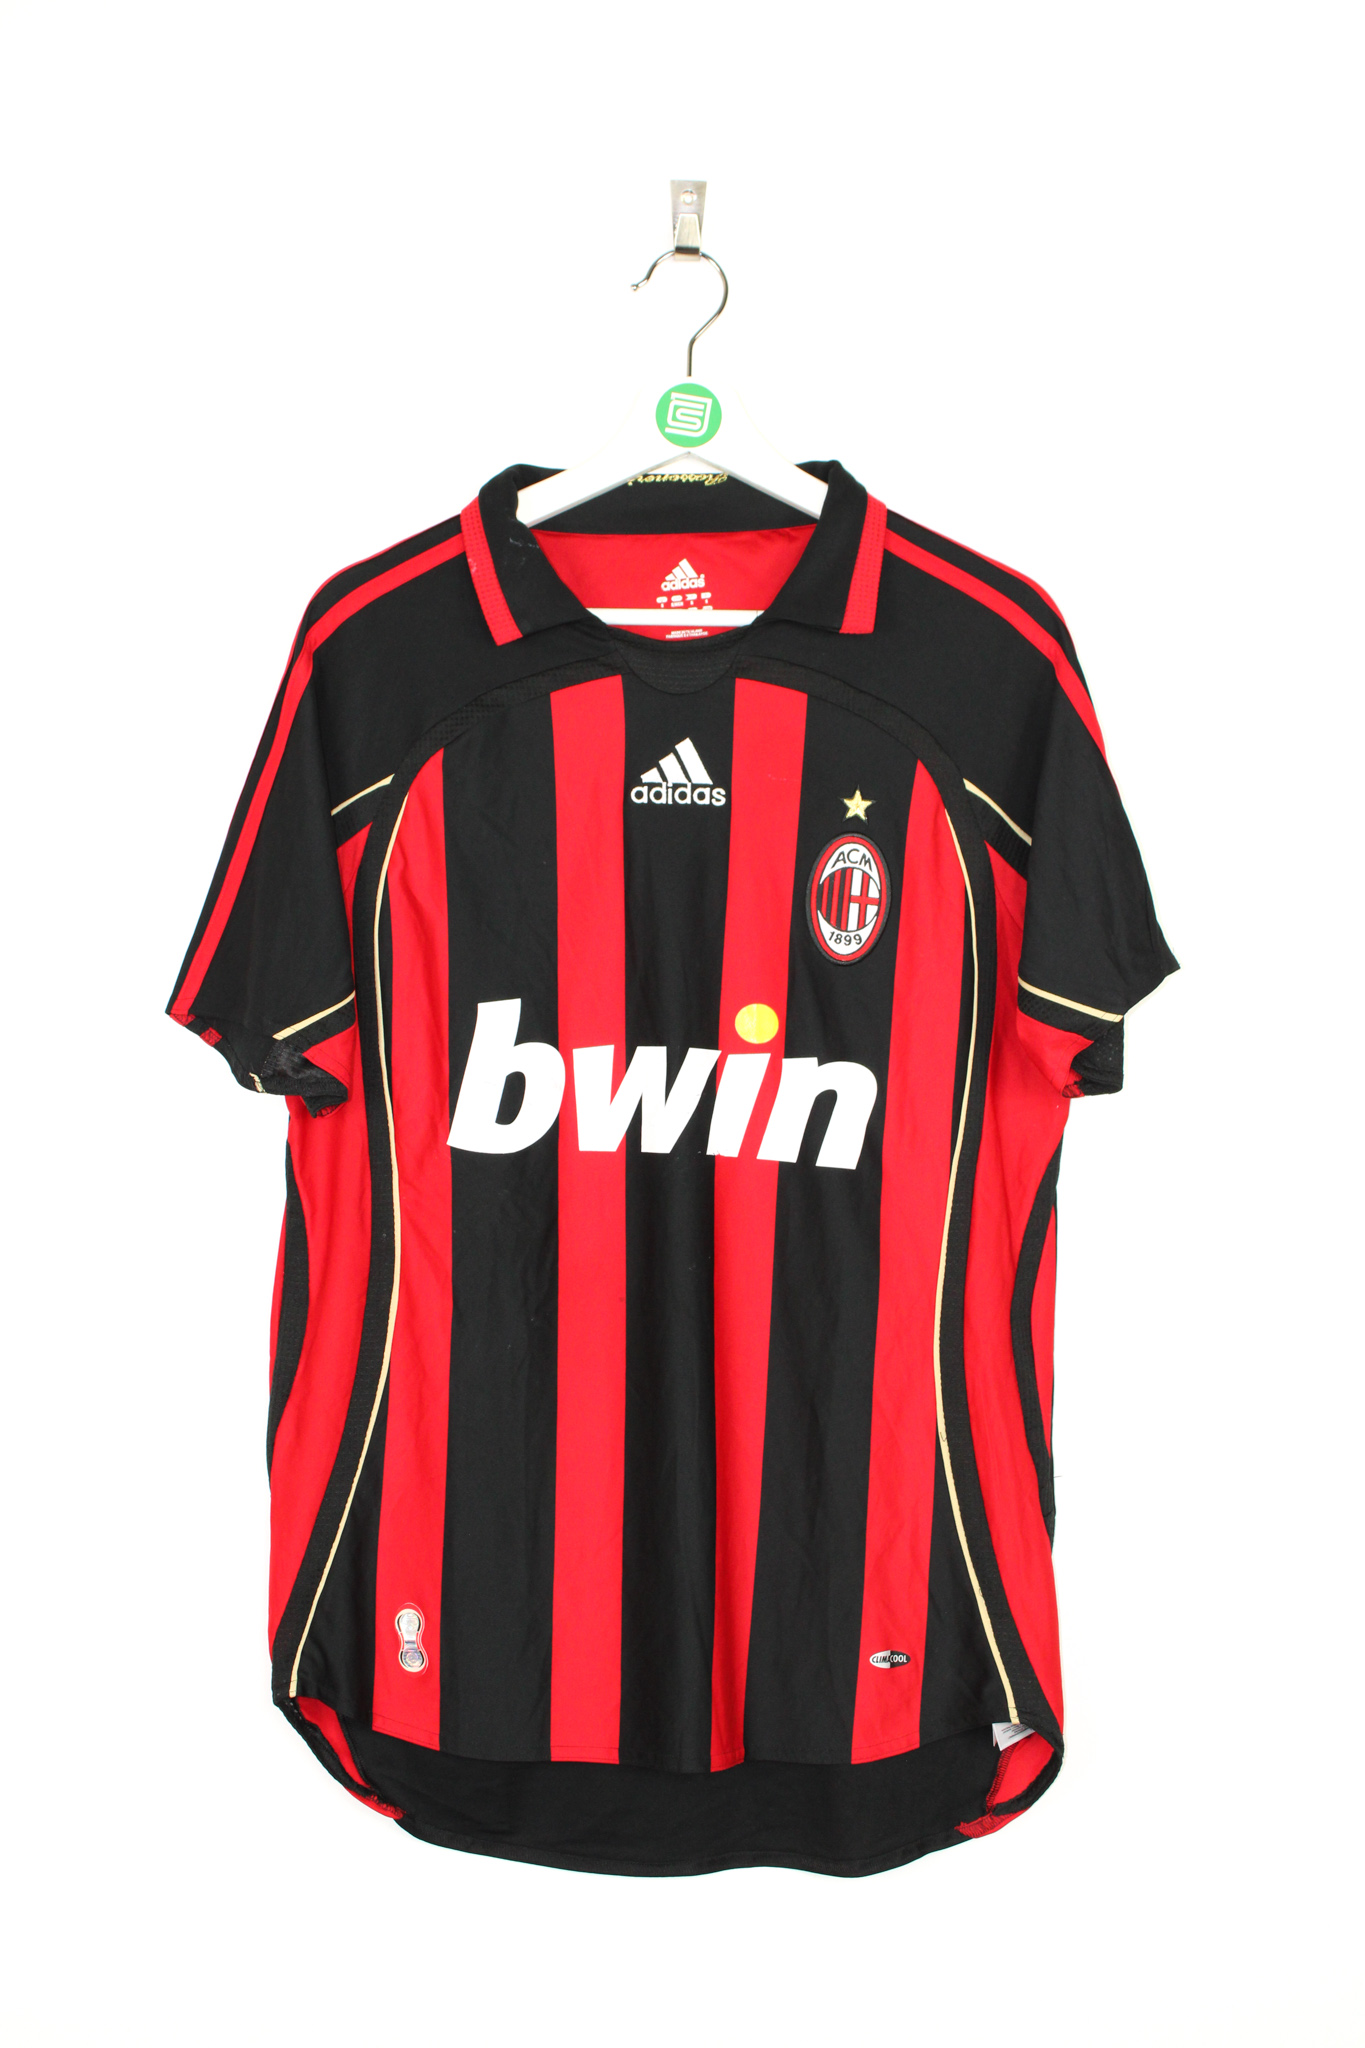 AC Milan 2006 KAKA #22 Away Football Retro Jersey Soccer Shirt 